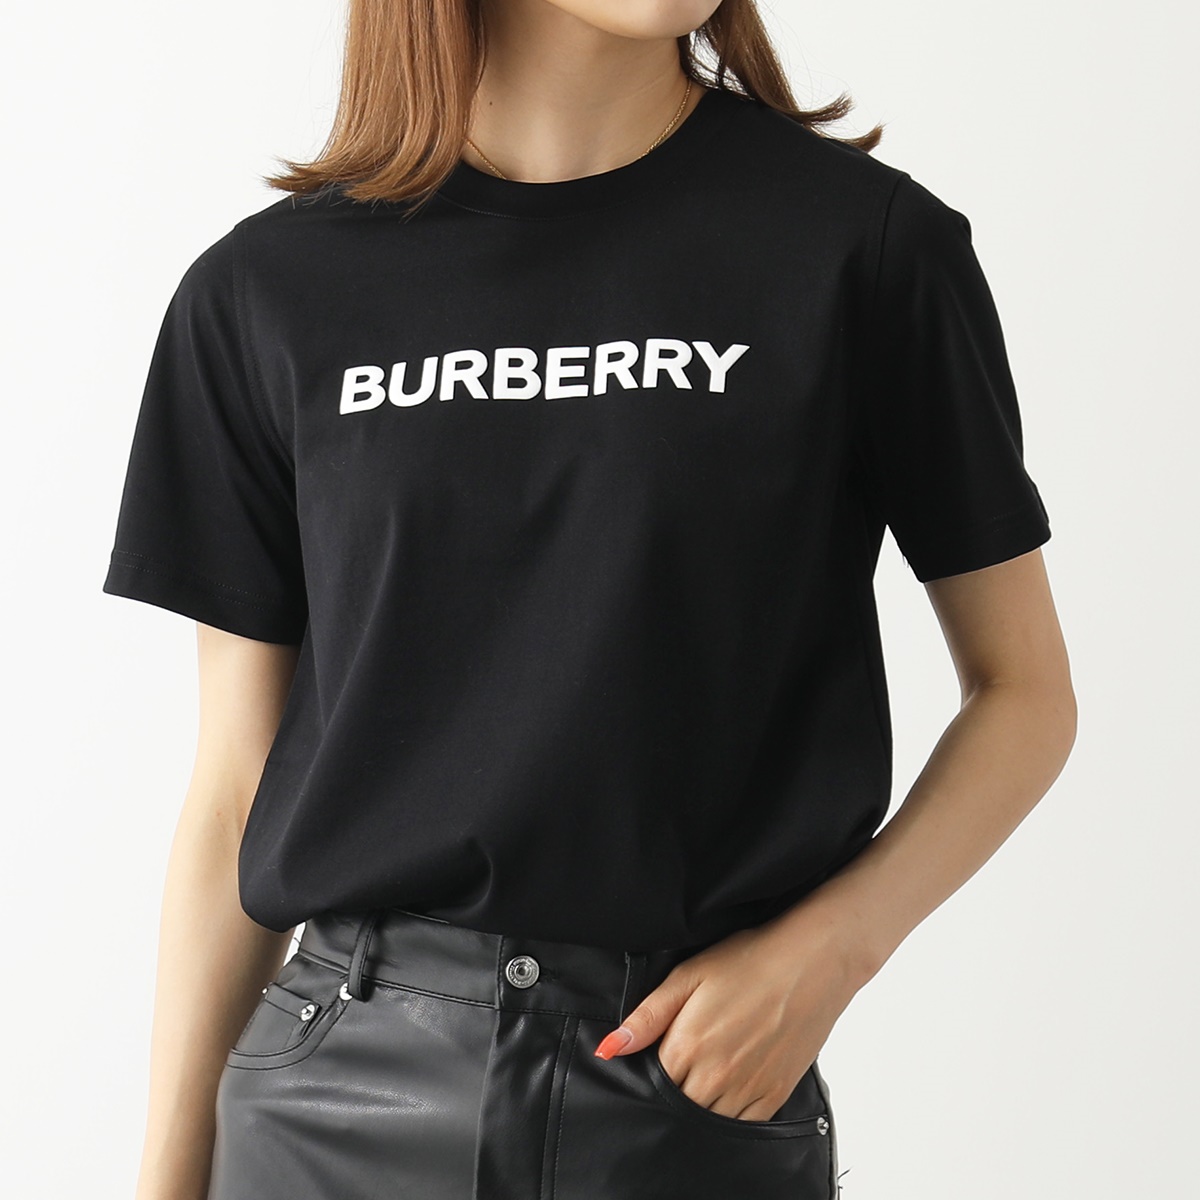 BURBERRY バーバリー 半袖 Tシャツ MARGOT BRN 8056724 8055251